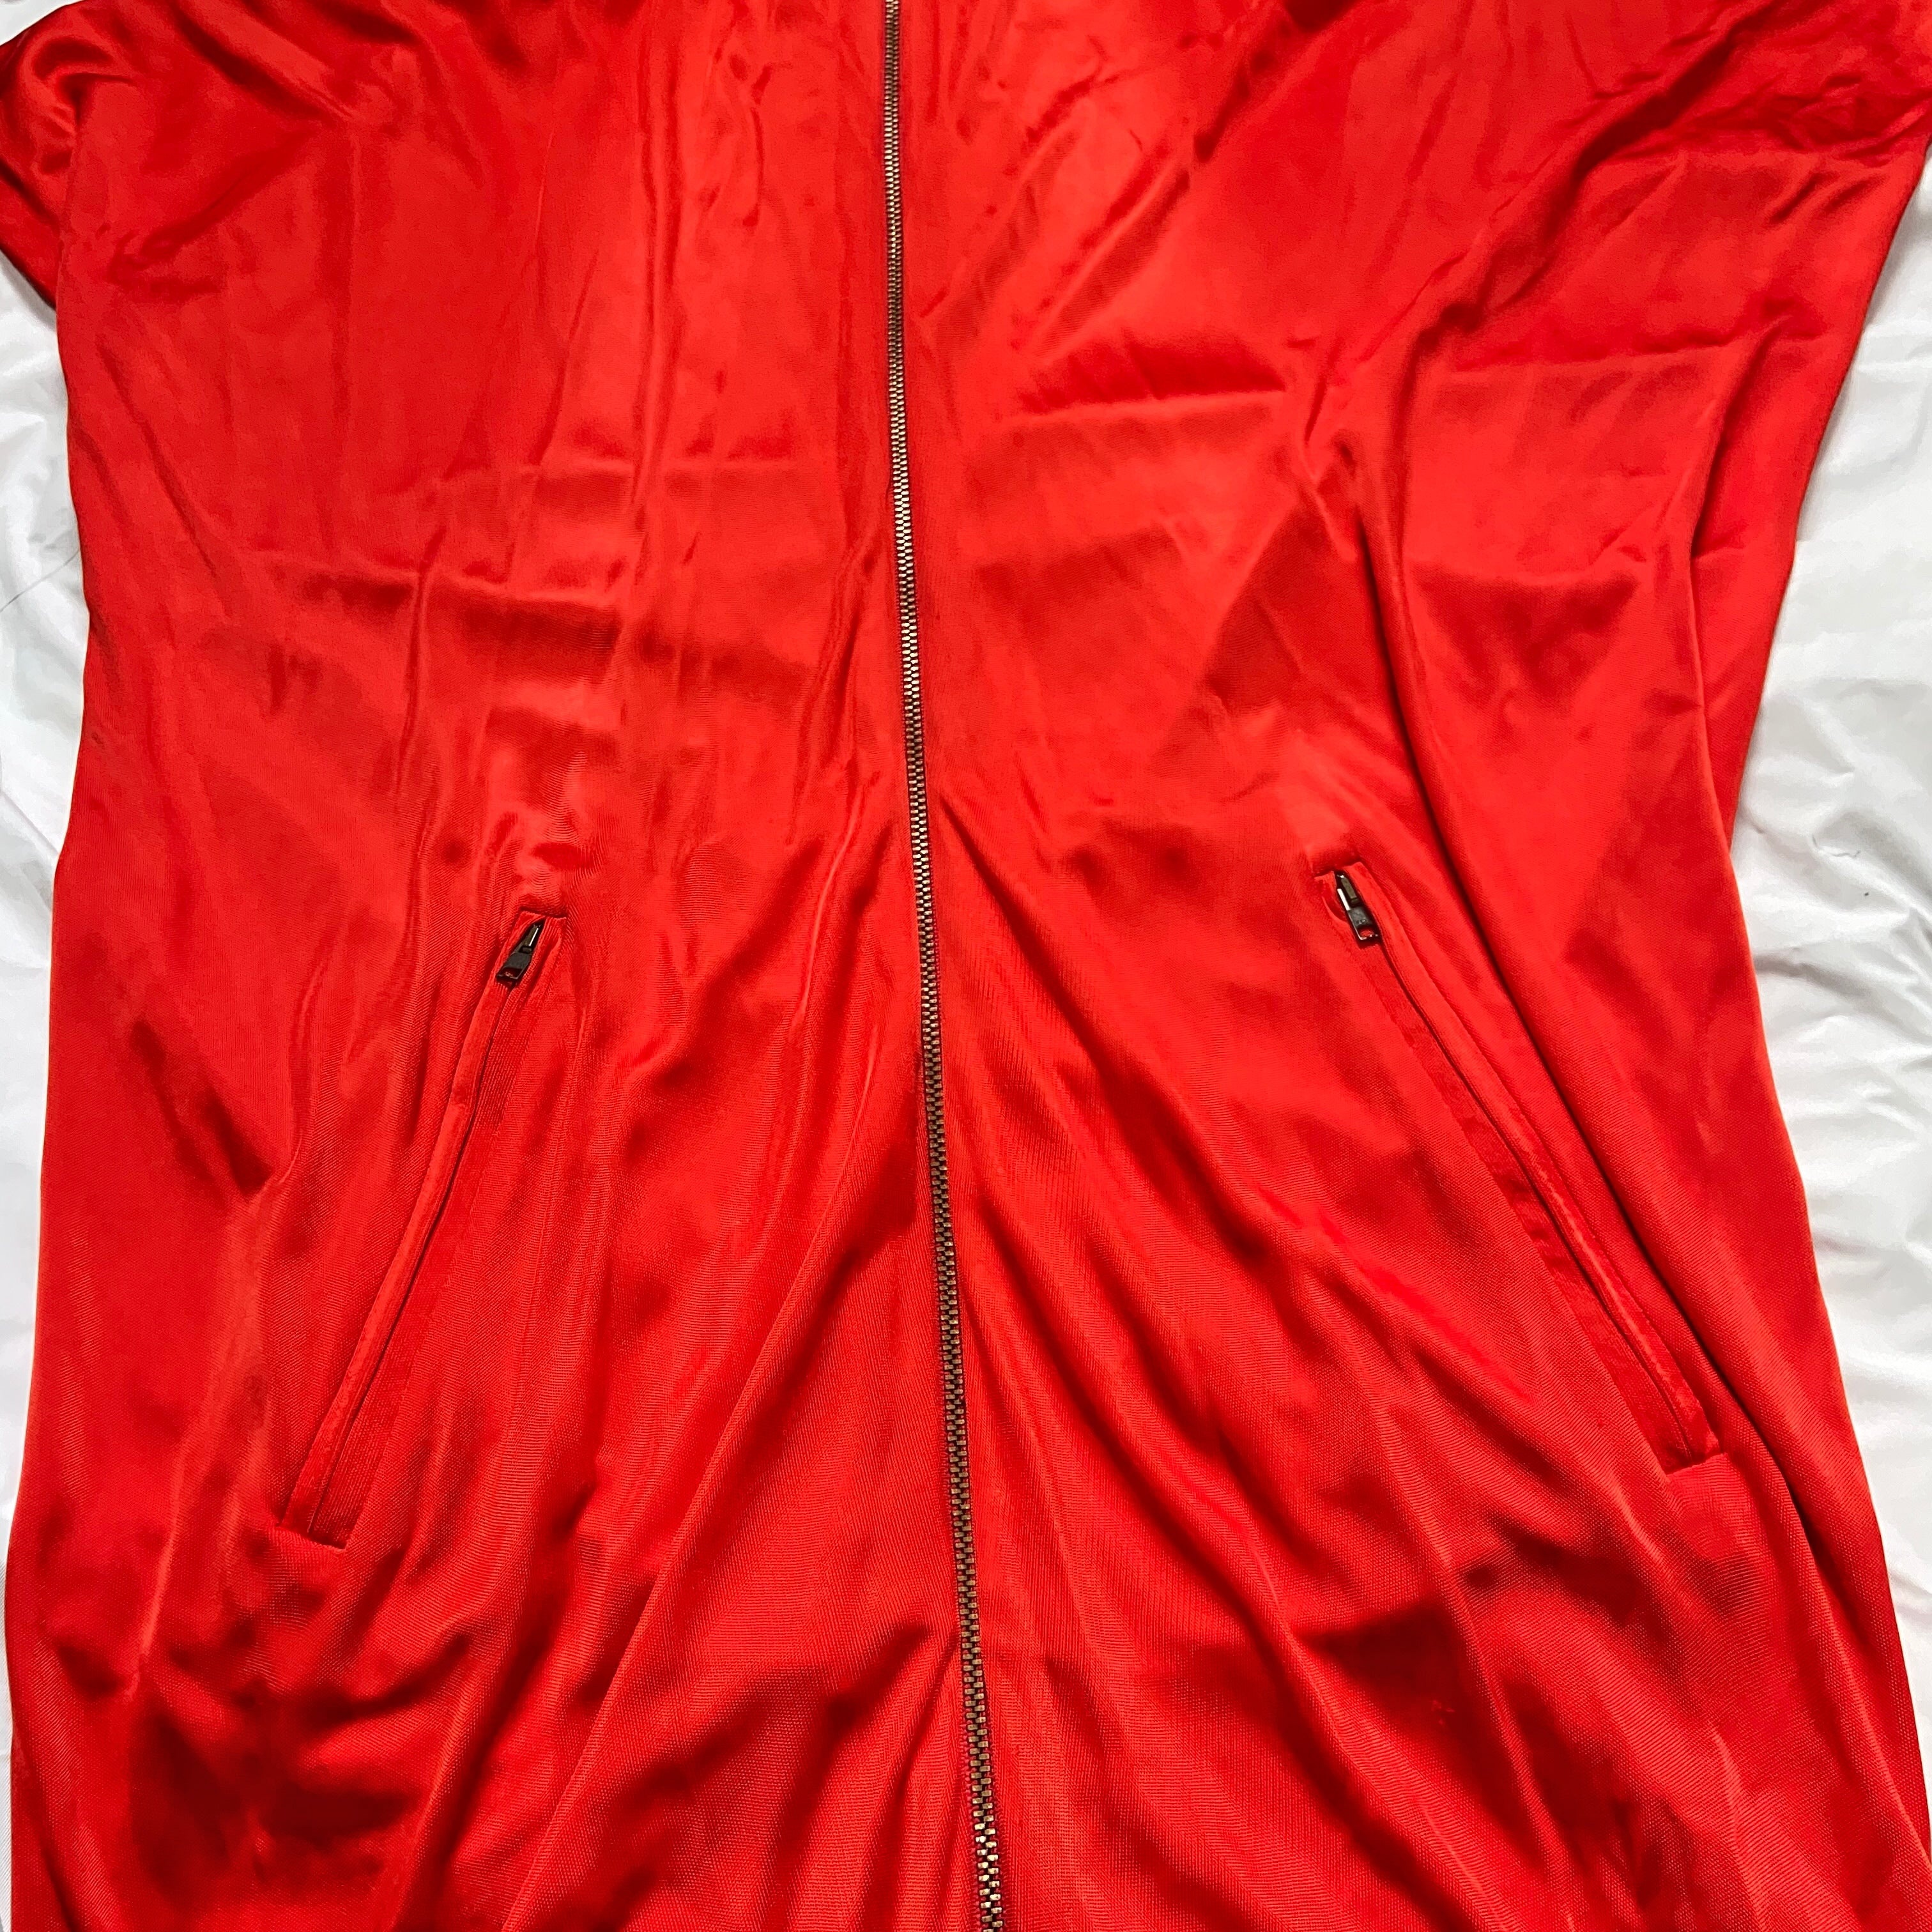 Jean Paul Gaultier fall 2007 red bomber zip dress - 7